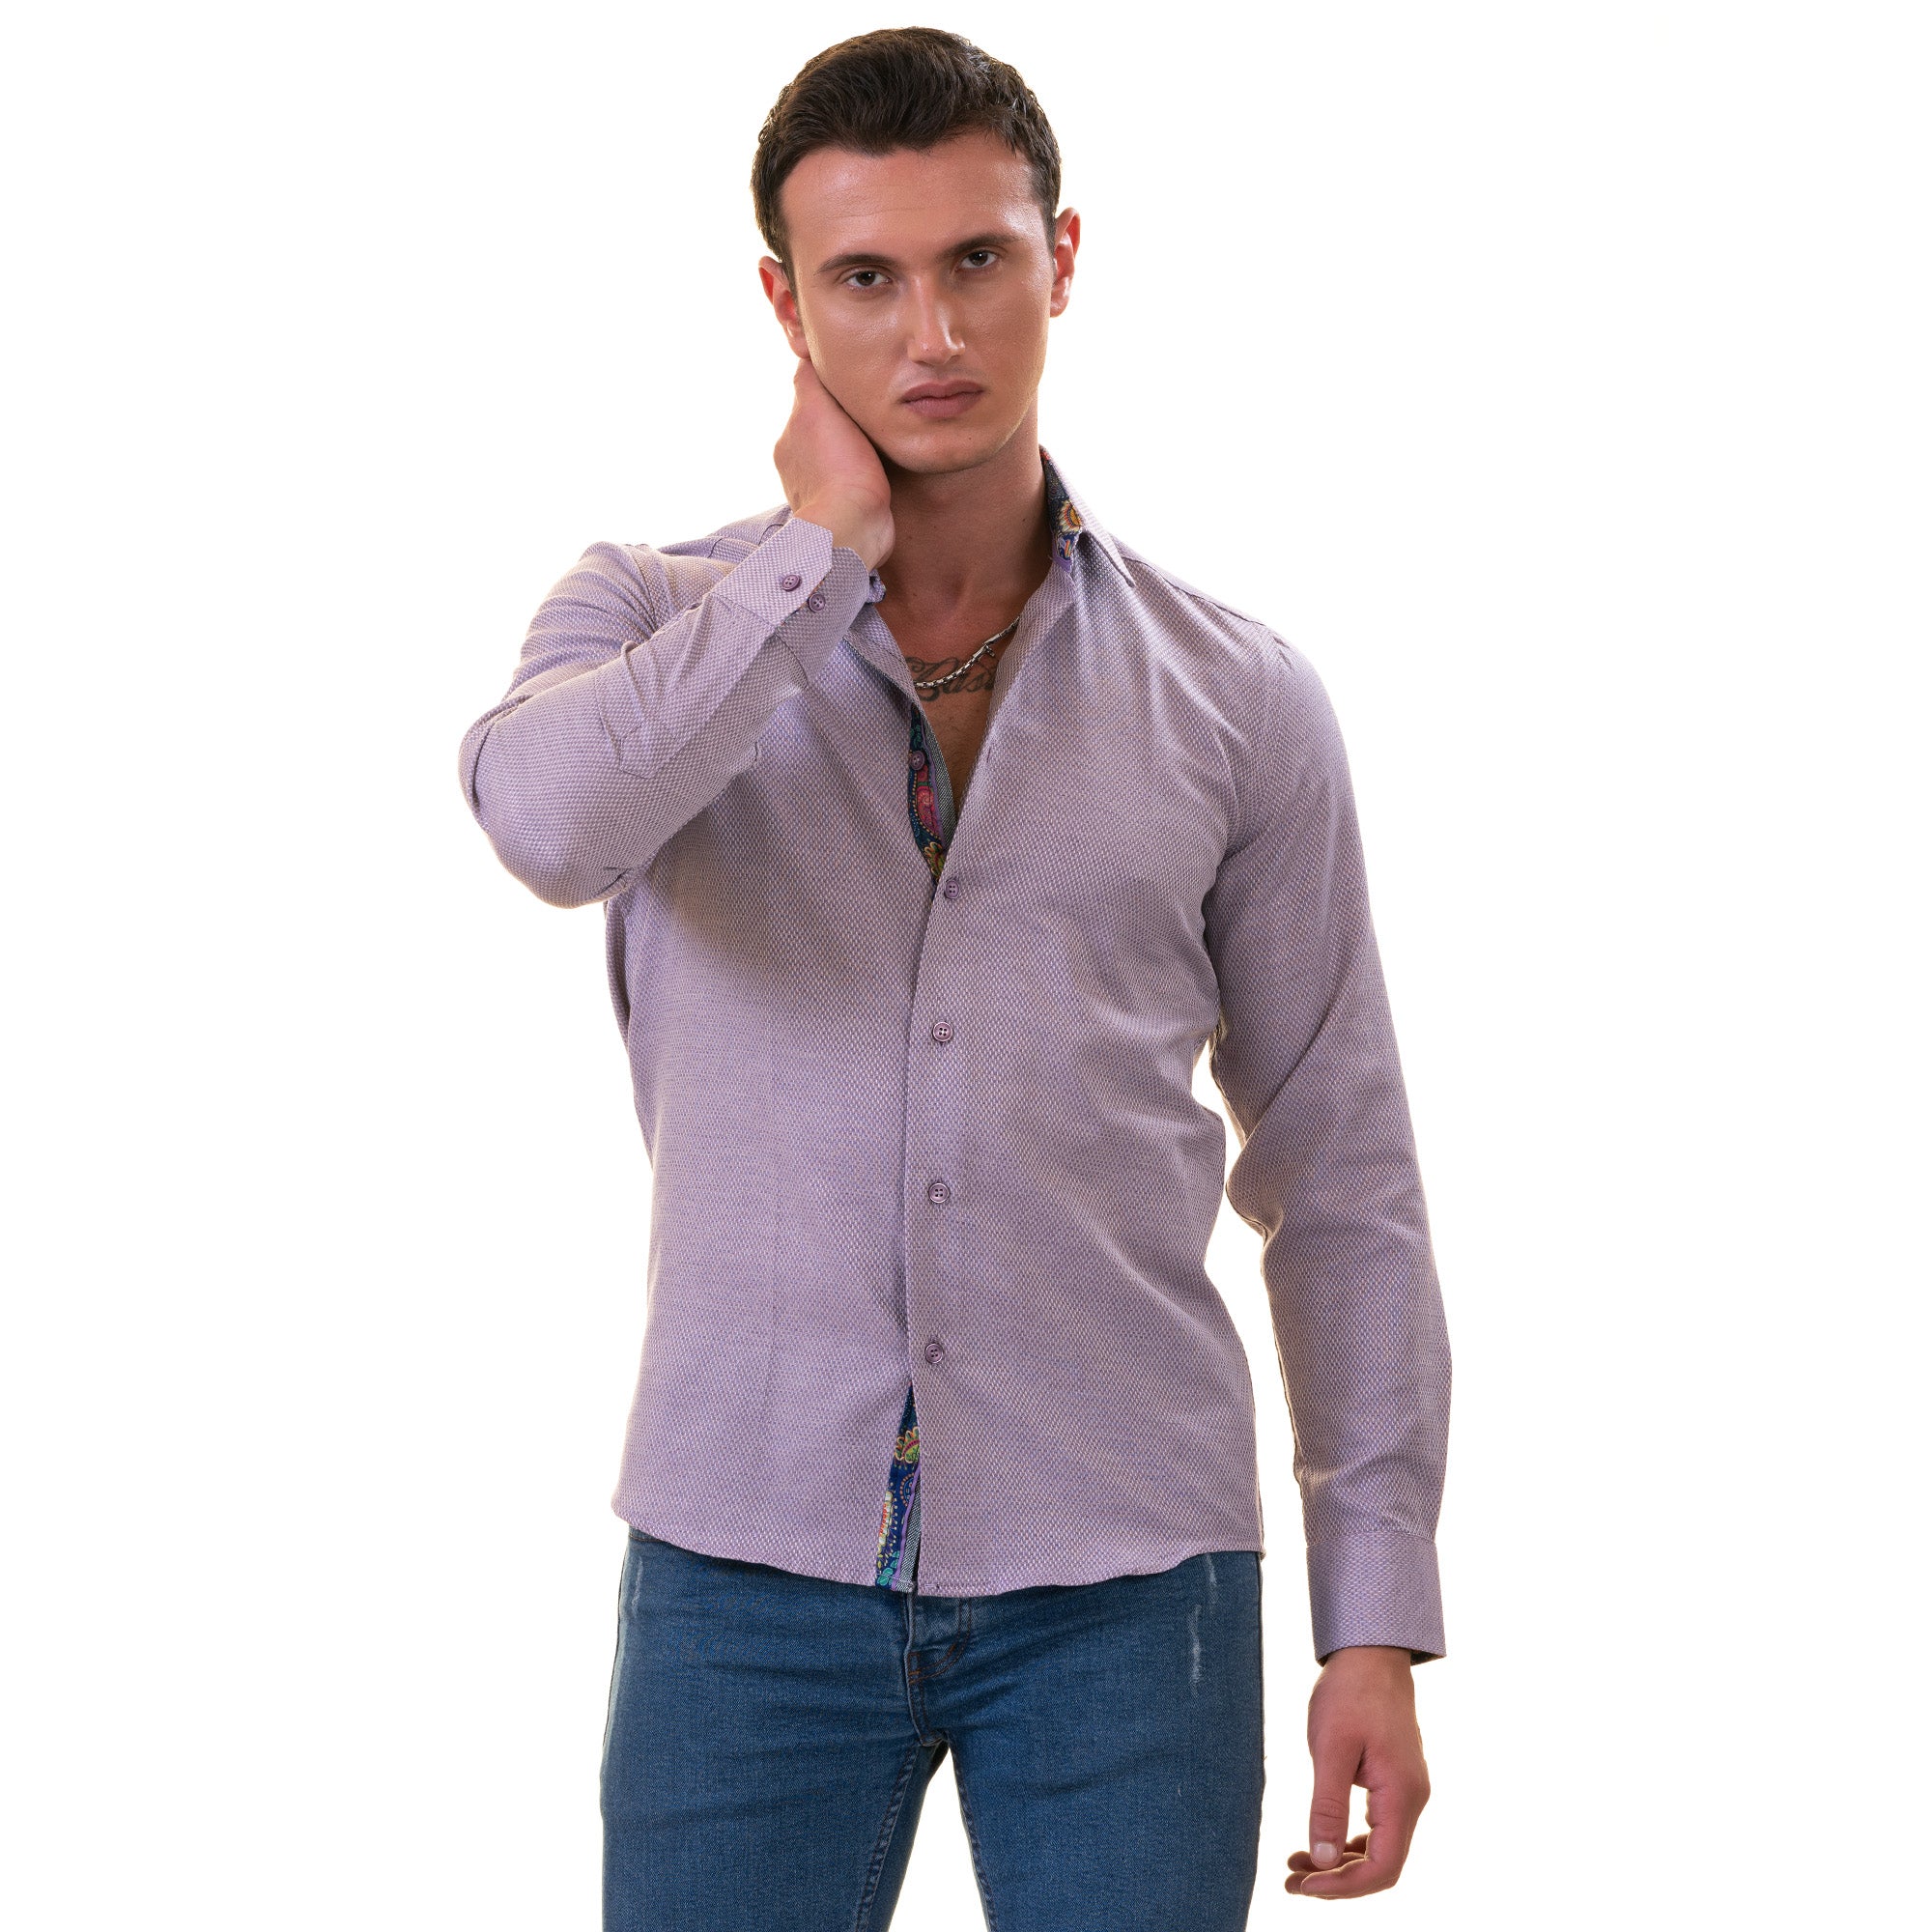 Purple Jackquard Men's  Slim Fit Designer Dress Shirt - Tailored Cotton Shirts for Work and Casual Wear